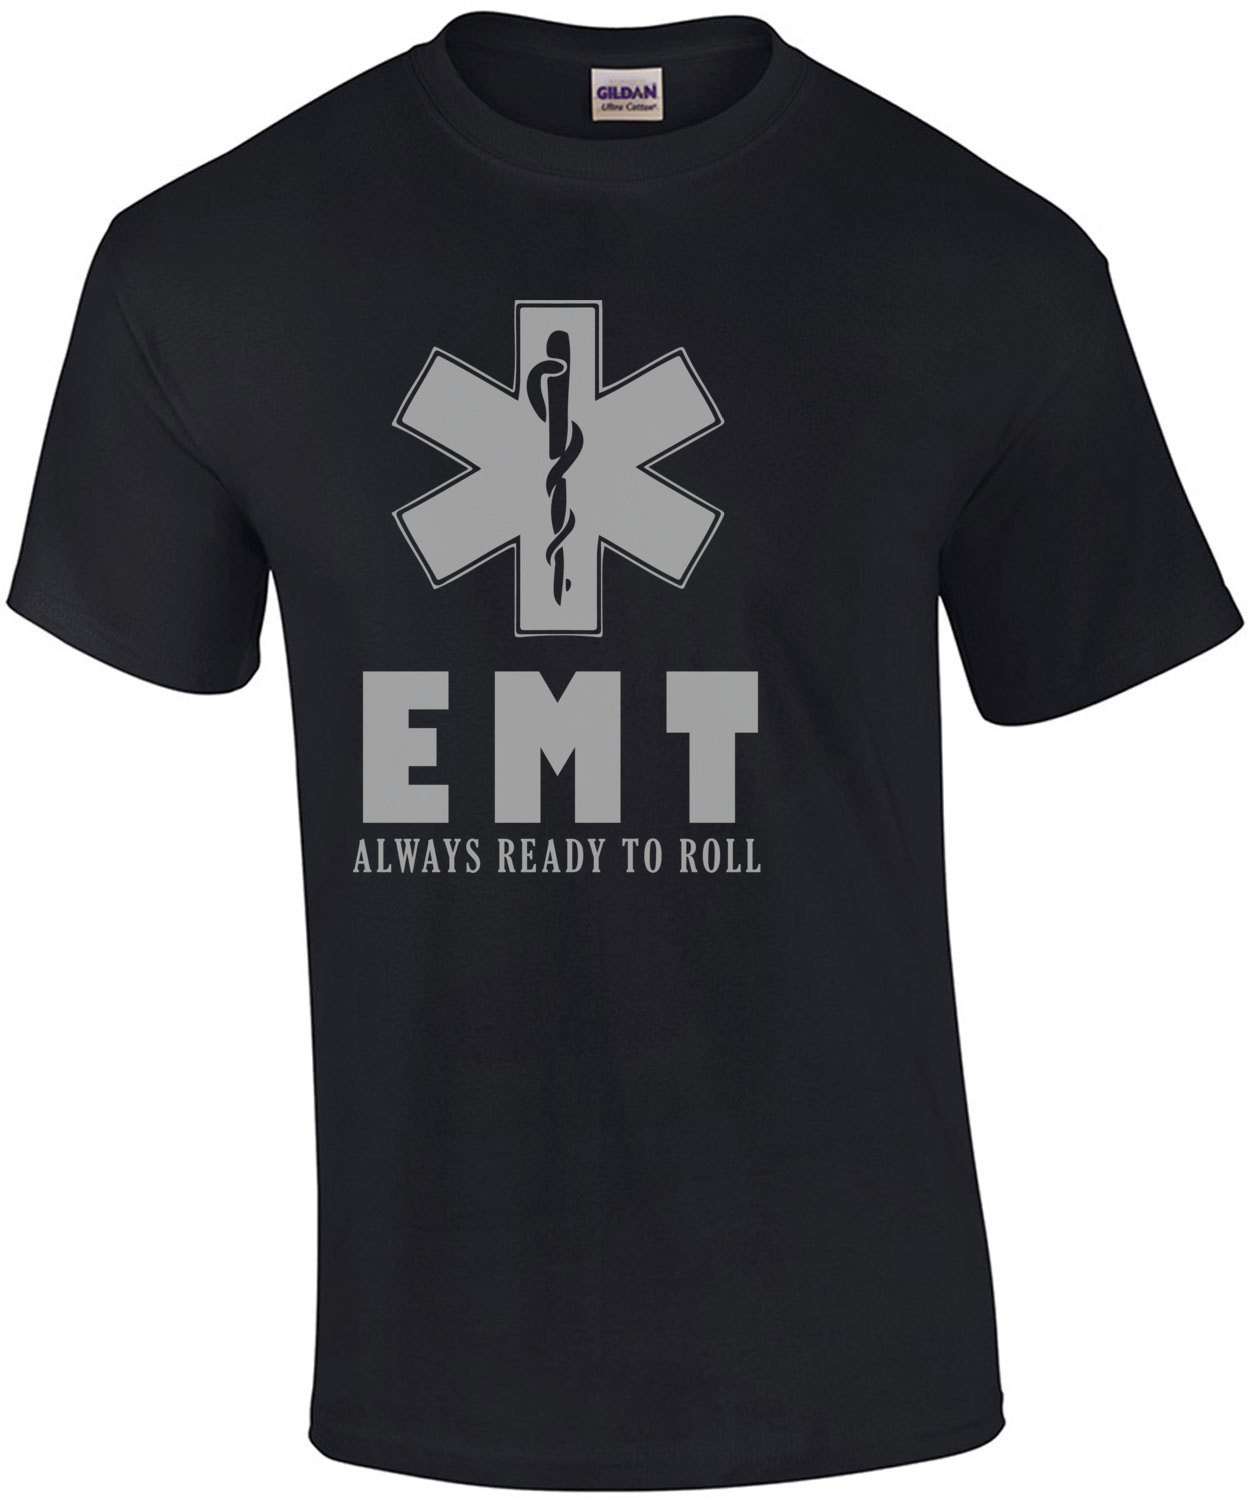 EMT Always ready to roll - Emergency Medical Technician - EMT T-Shirt